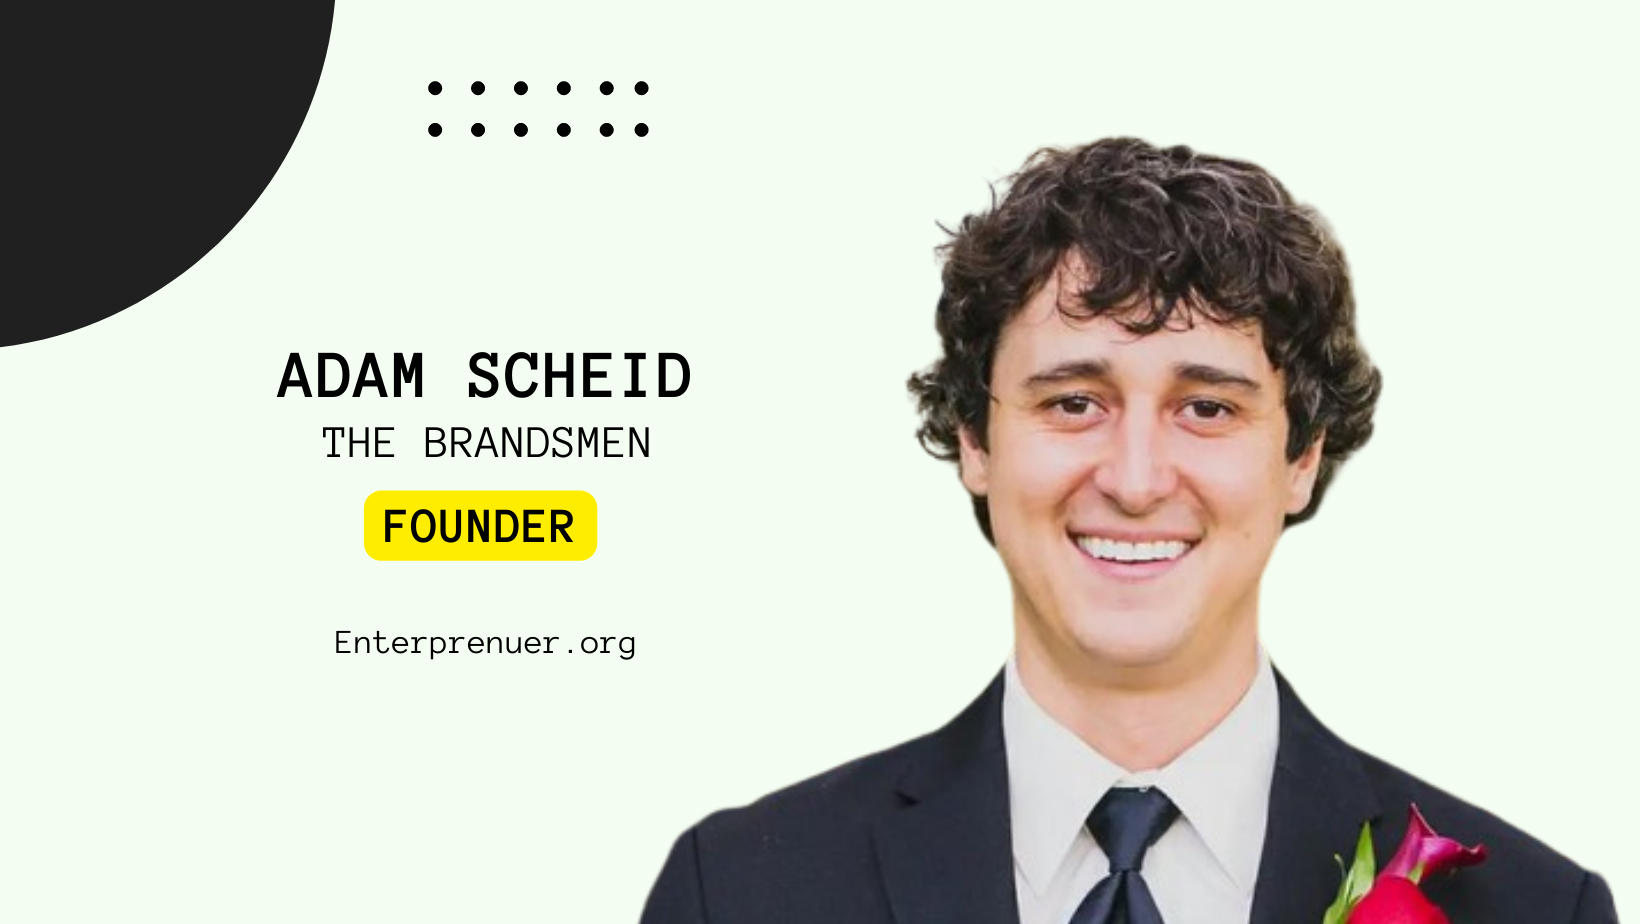 Meet Adam Scheid Co-Founder of The Brandsmen